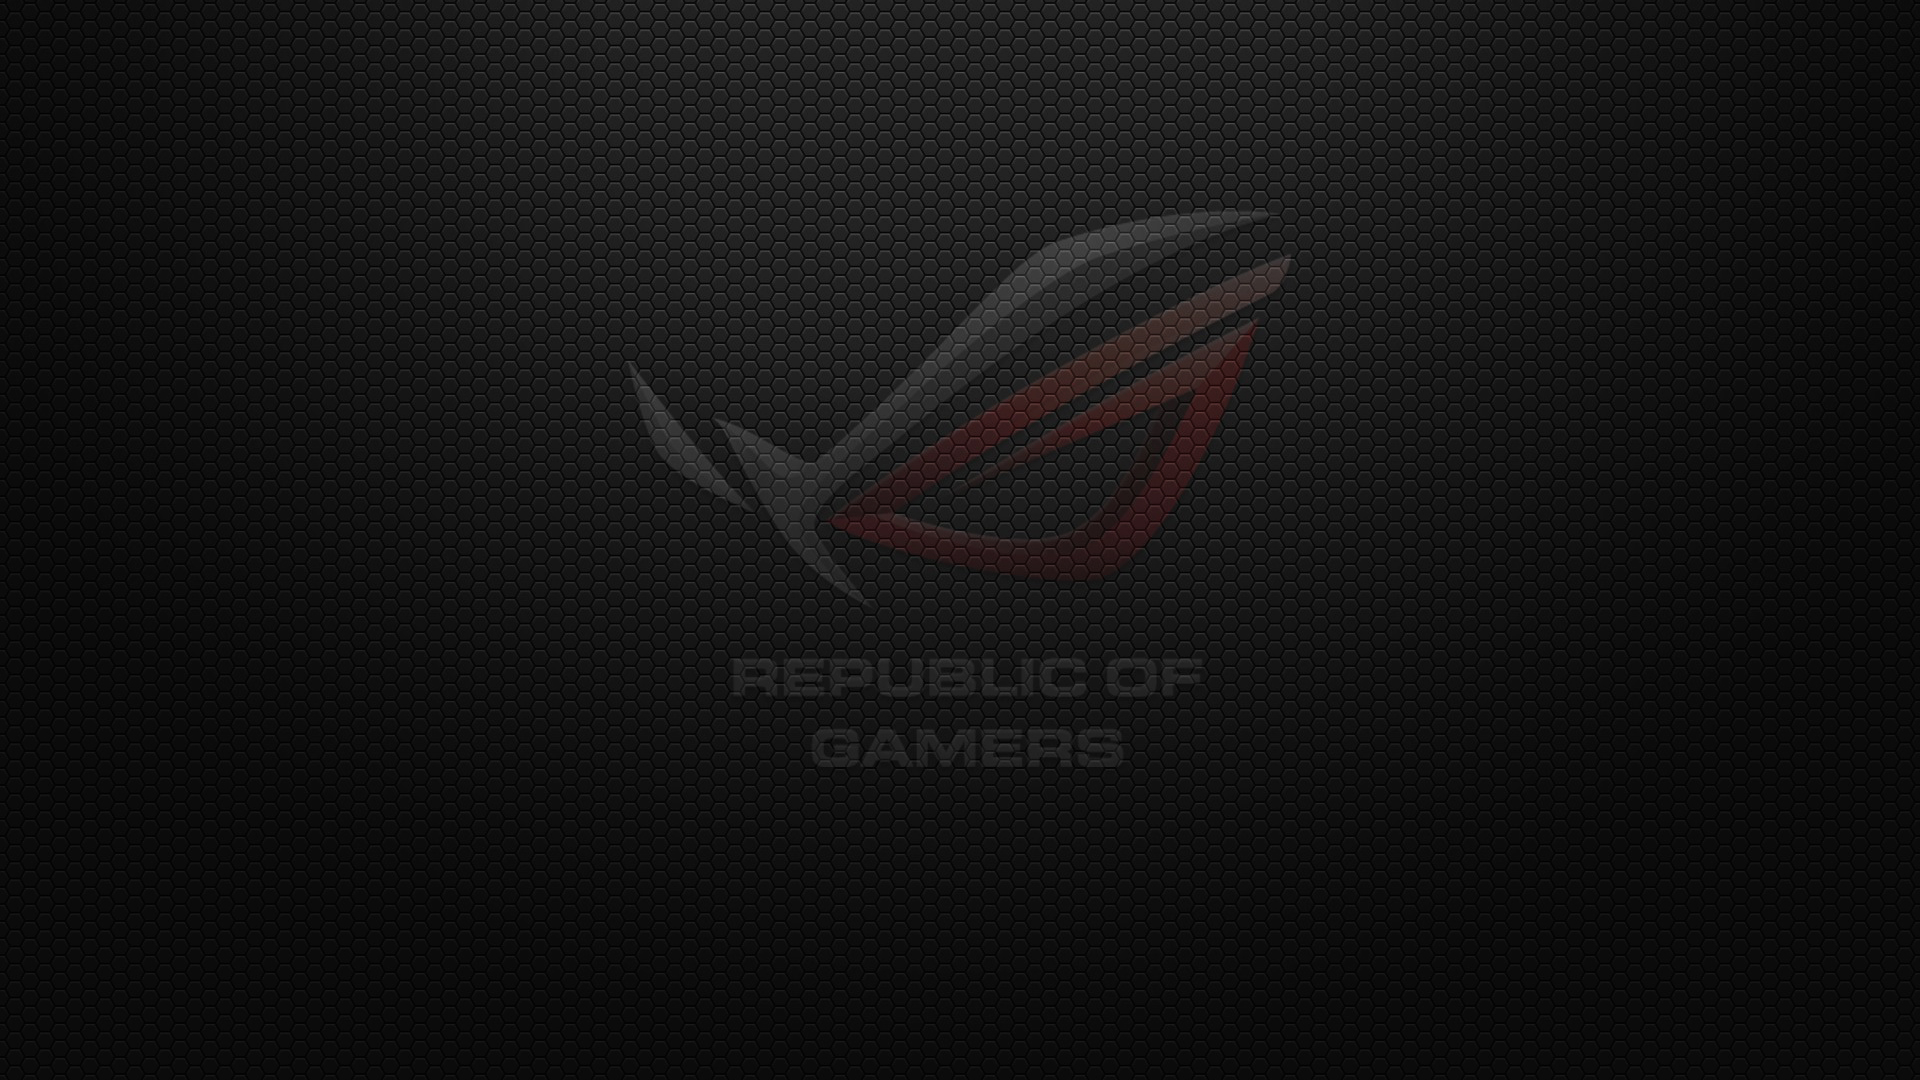 asus rog republic of gamers logo hd 1920x1080 1080p wallpaper and